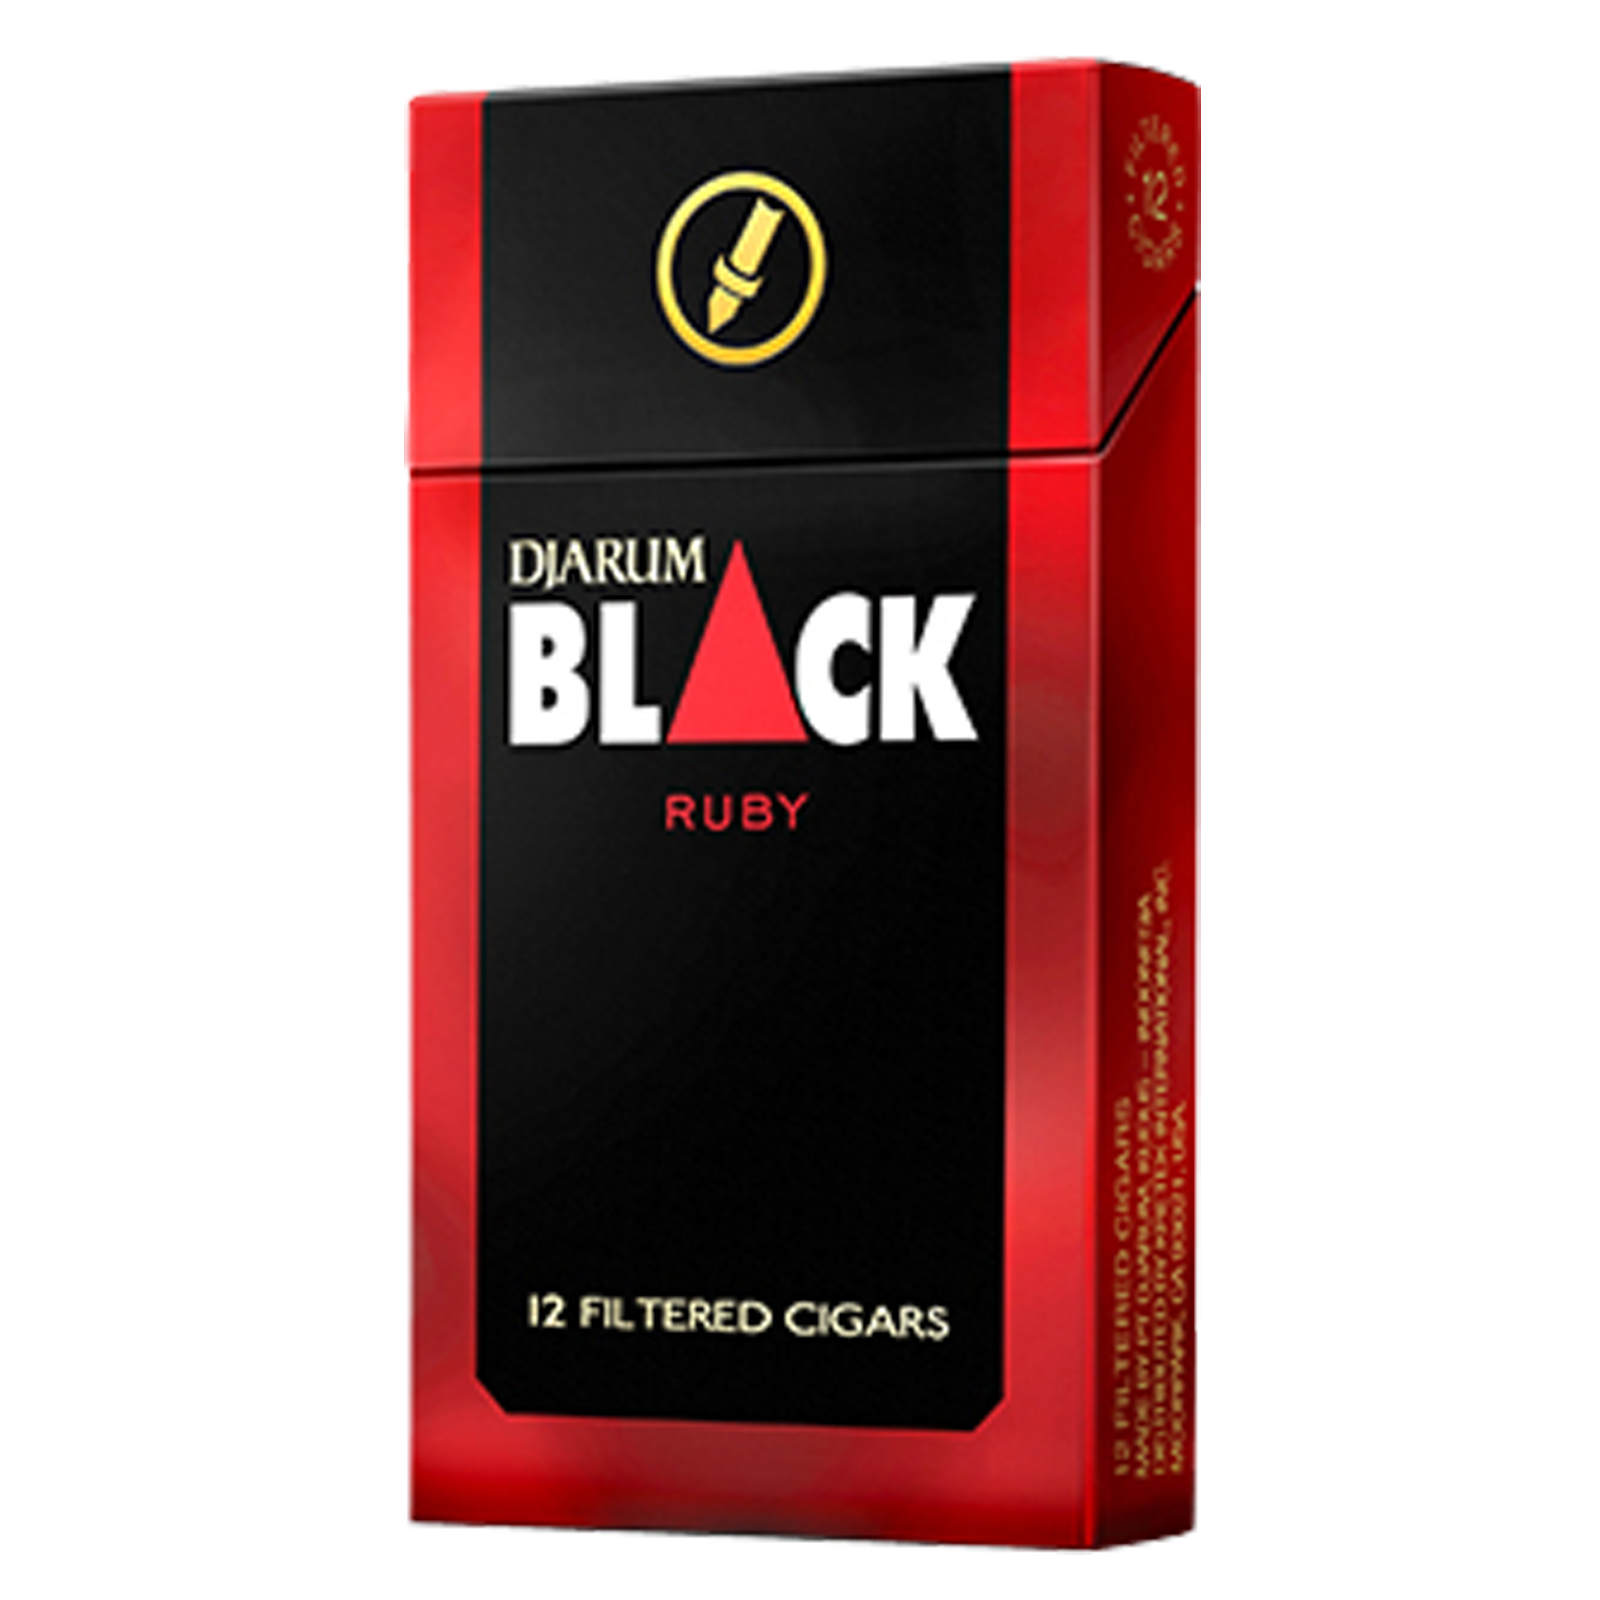 Djarum Black Ruby Filtered Cigarillos 12ct